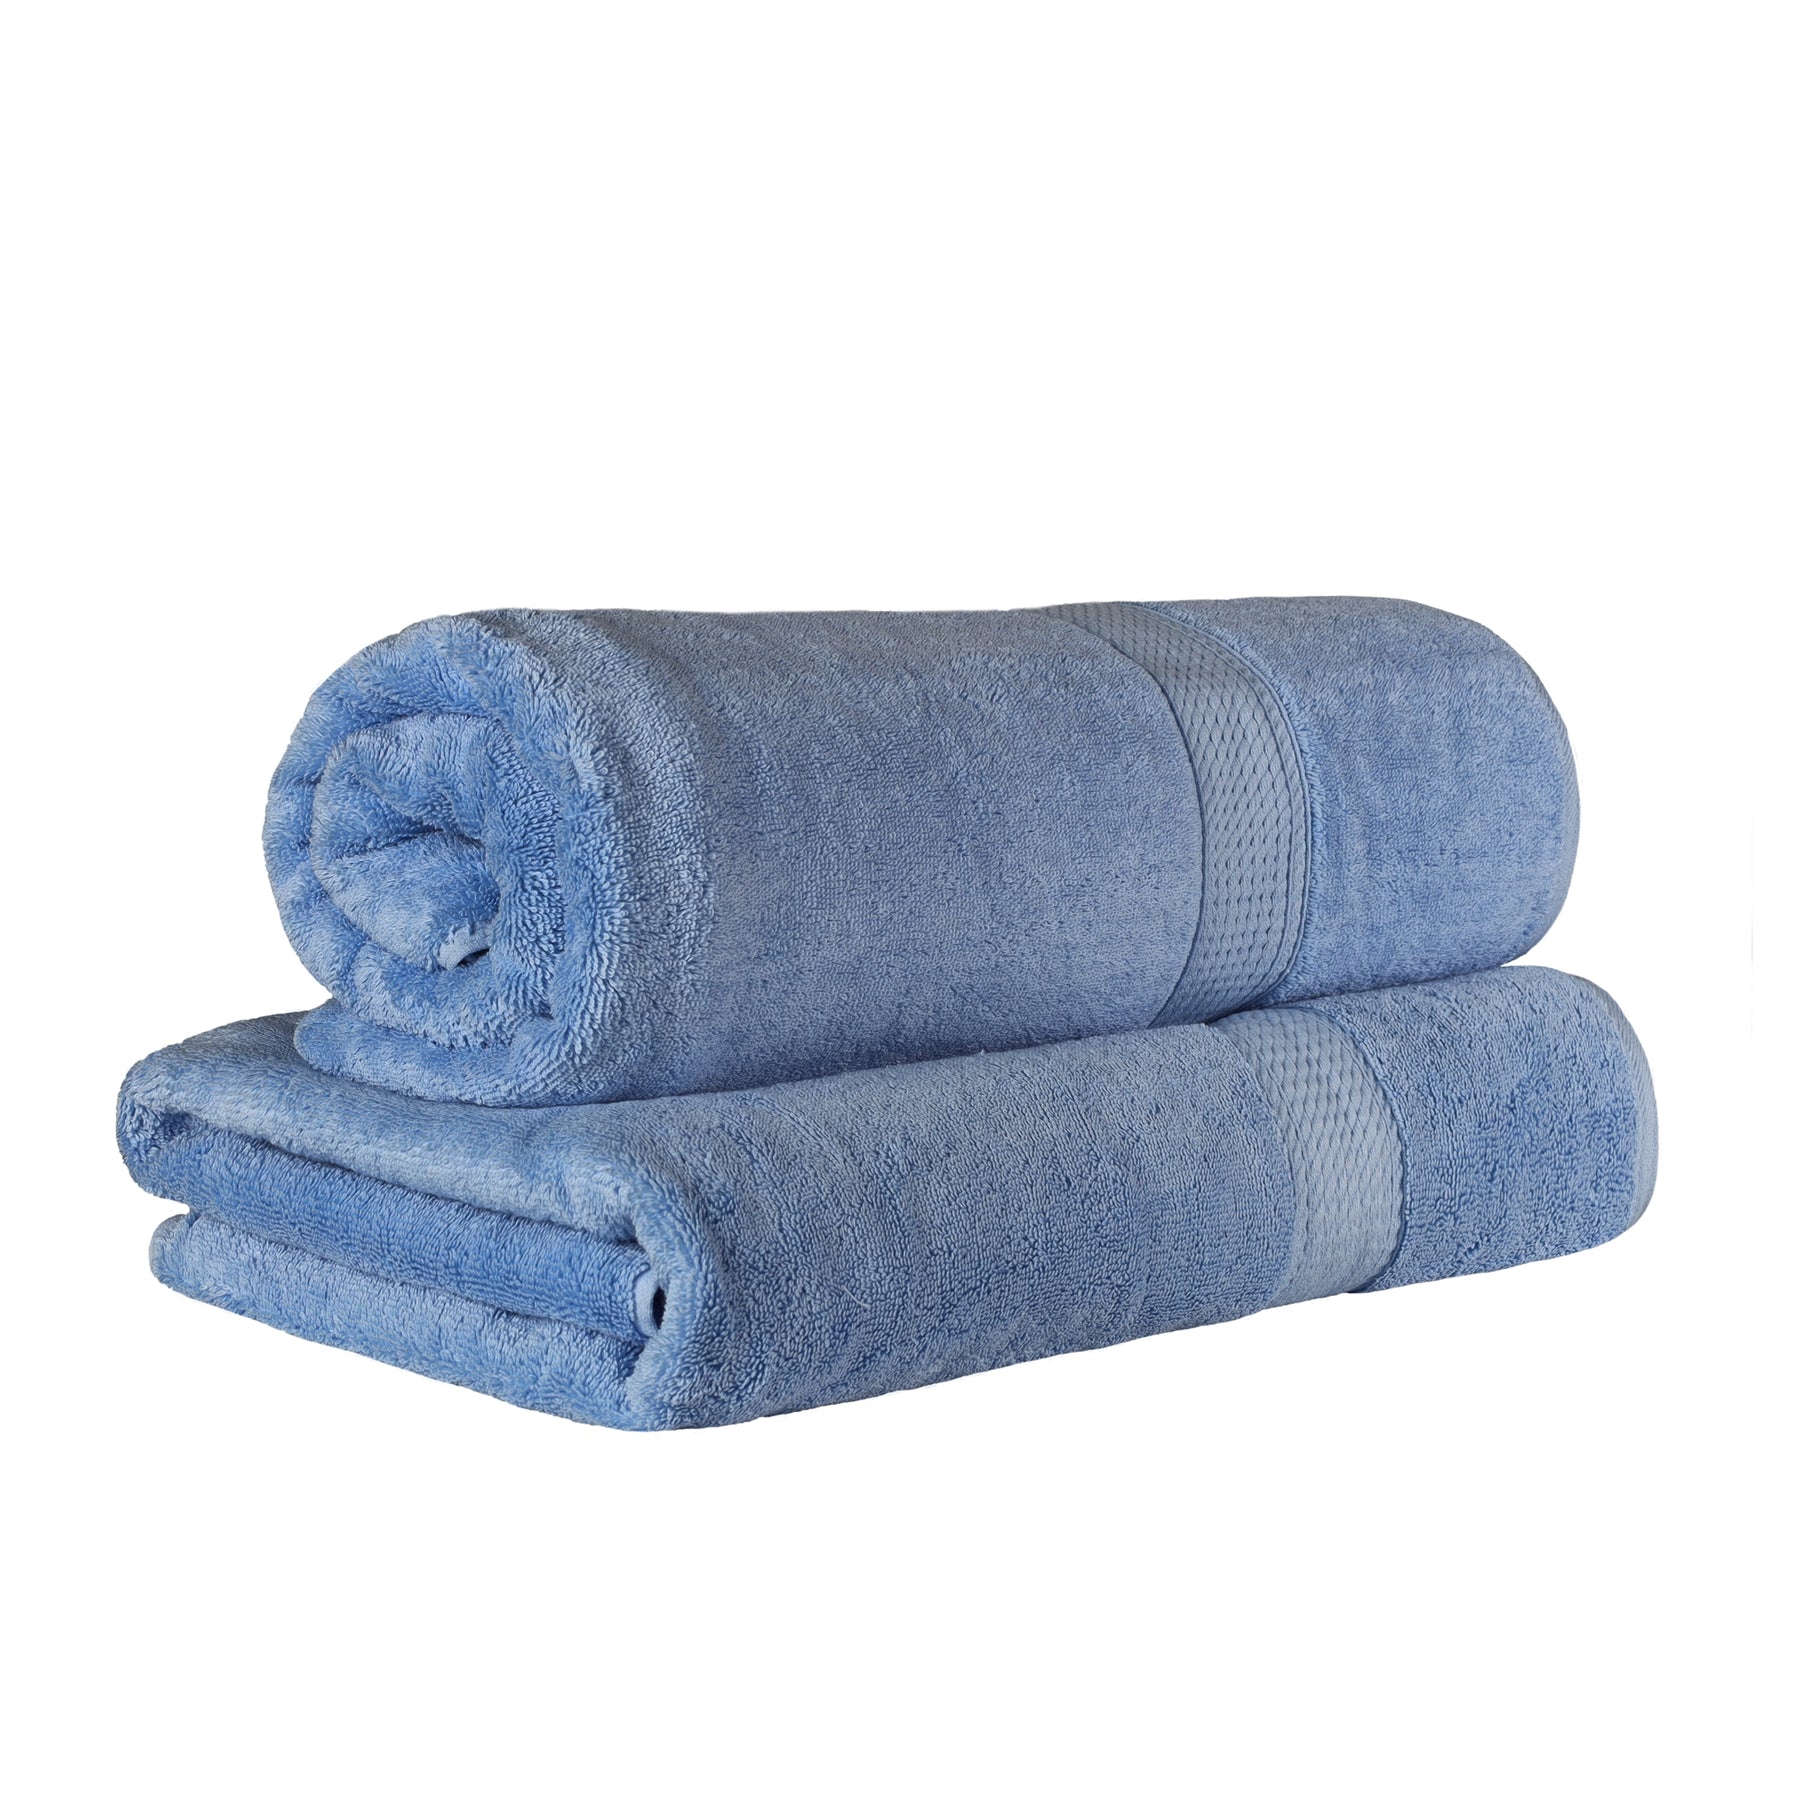 Egyptian Cotton Highly Absorbent 2 Piece Ultra-Plush Solid Bath Sheet Set - Denim Blue